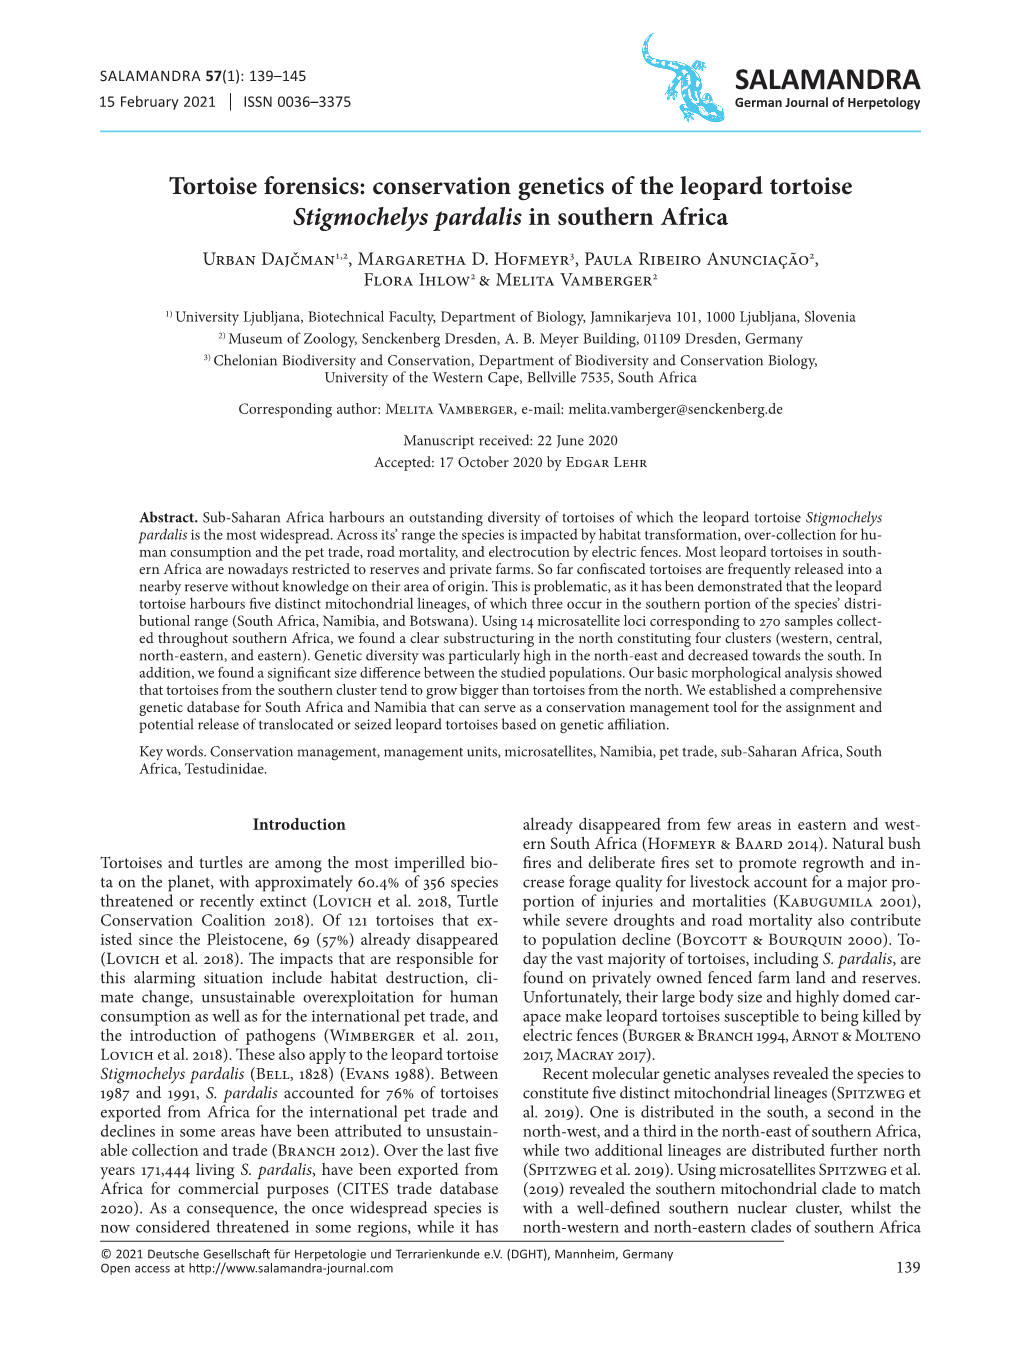 Conservation Genetics of the Leopard Tortoise Stigmochelys Pardalis in Southern Africa Urban Dajčman1,2, Margaretha D